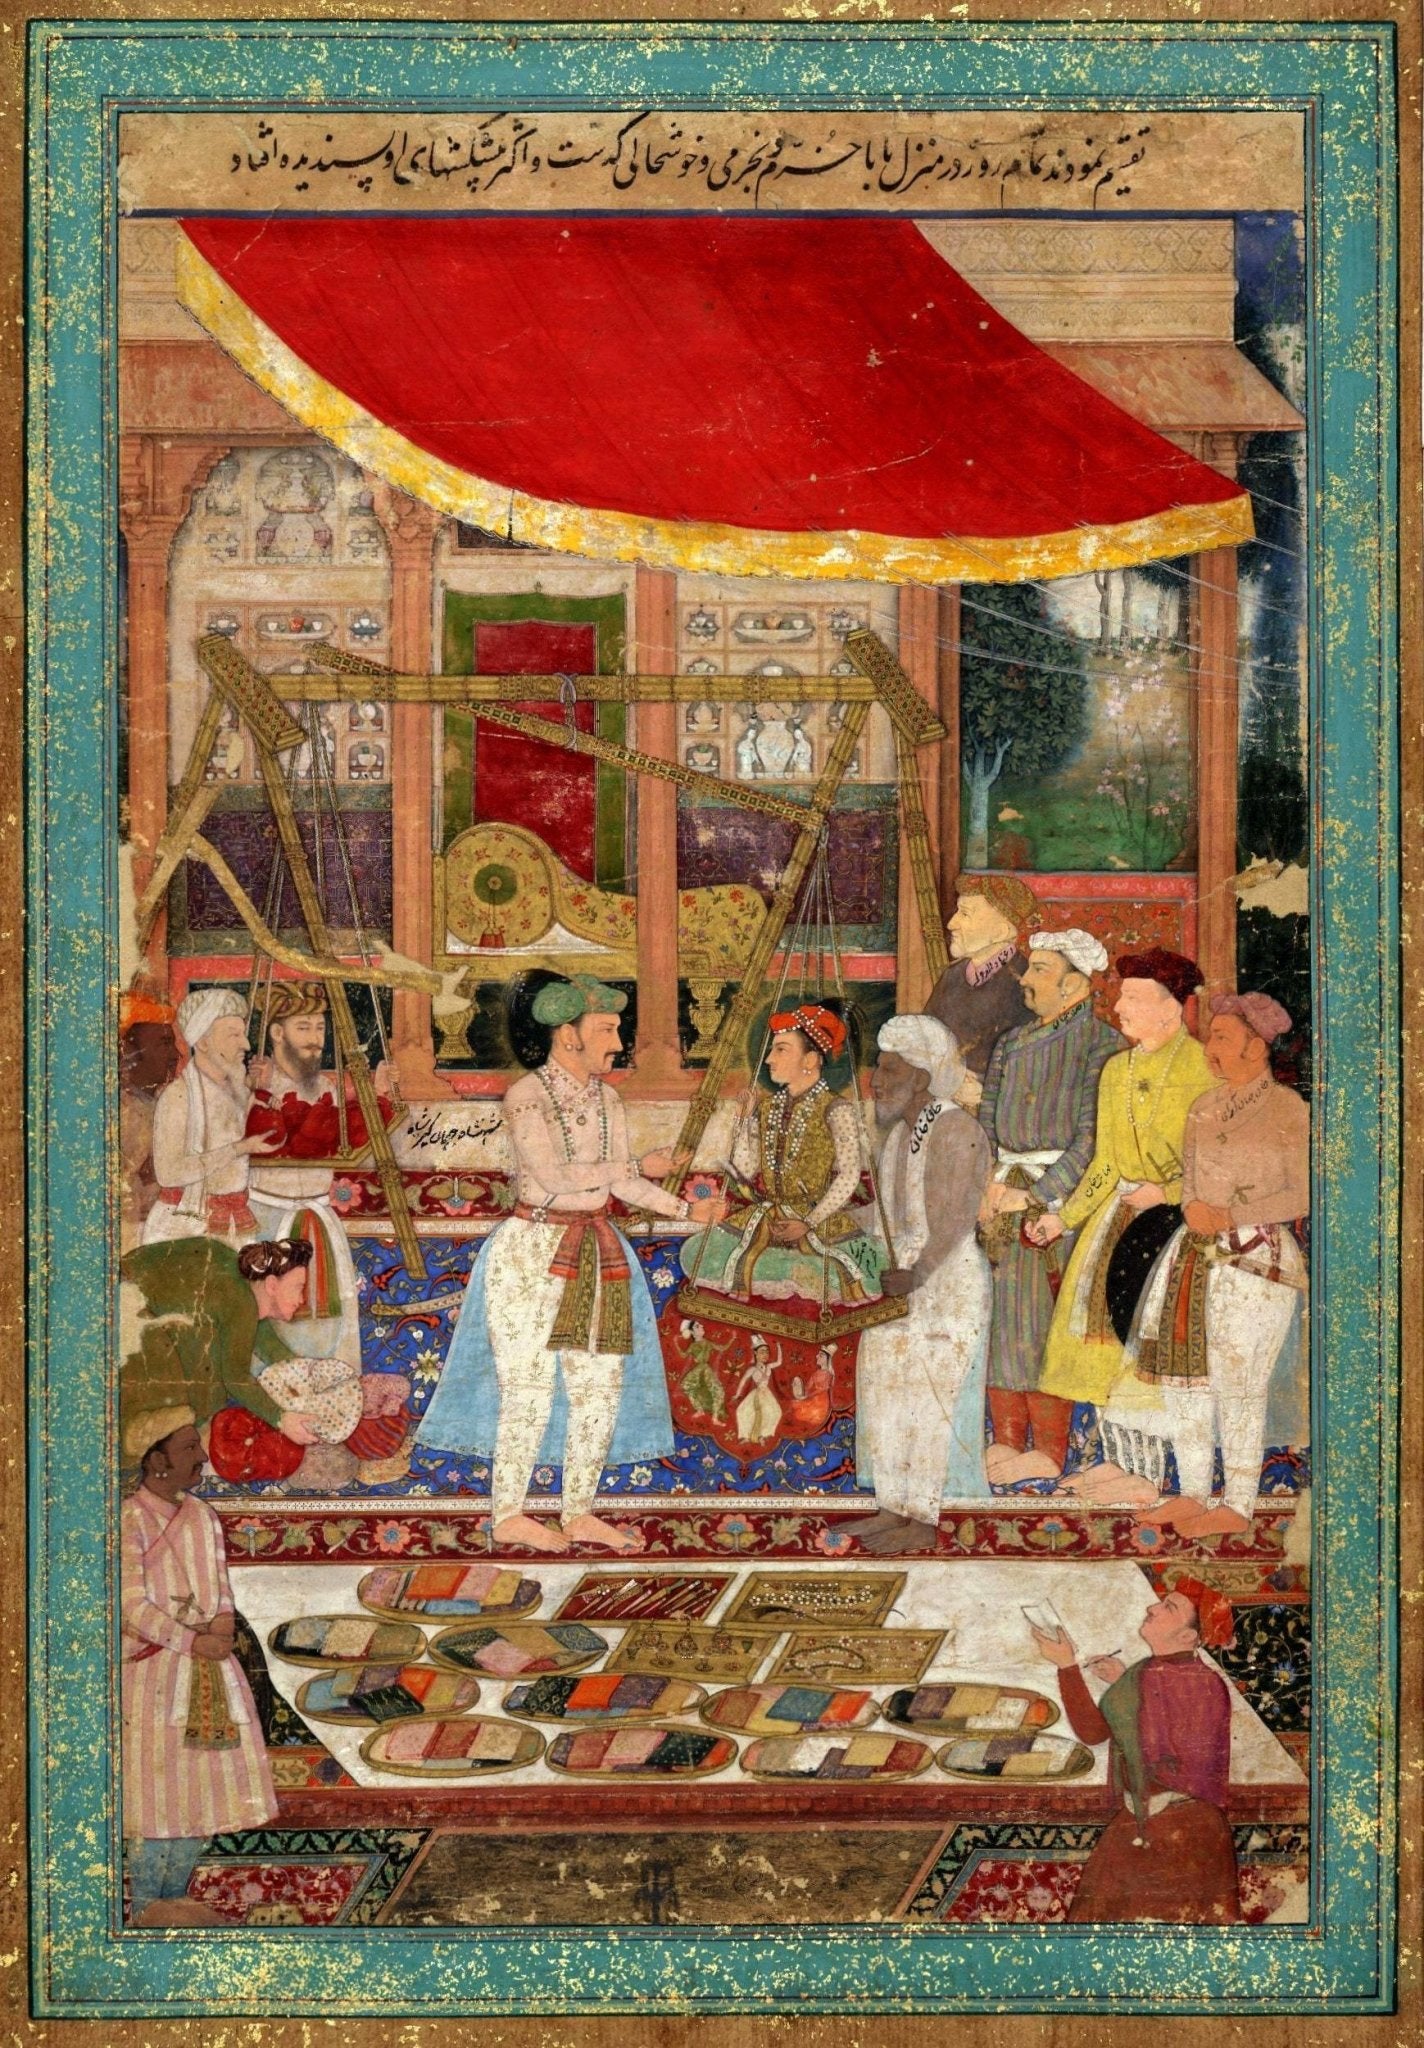 Empereur Jahangir et Khurram par Manohar (art miniature indo-persan traditionnel)